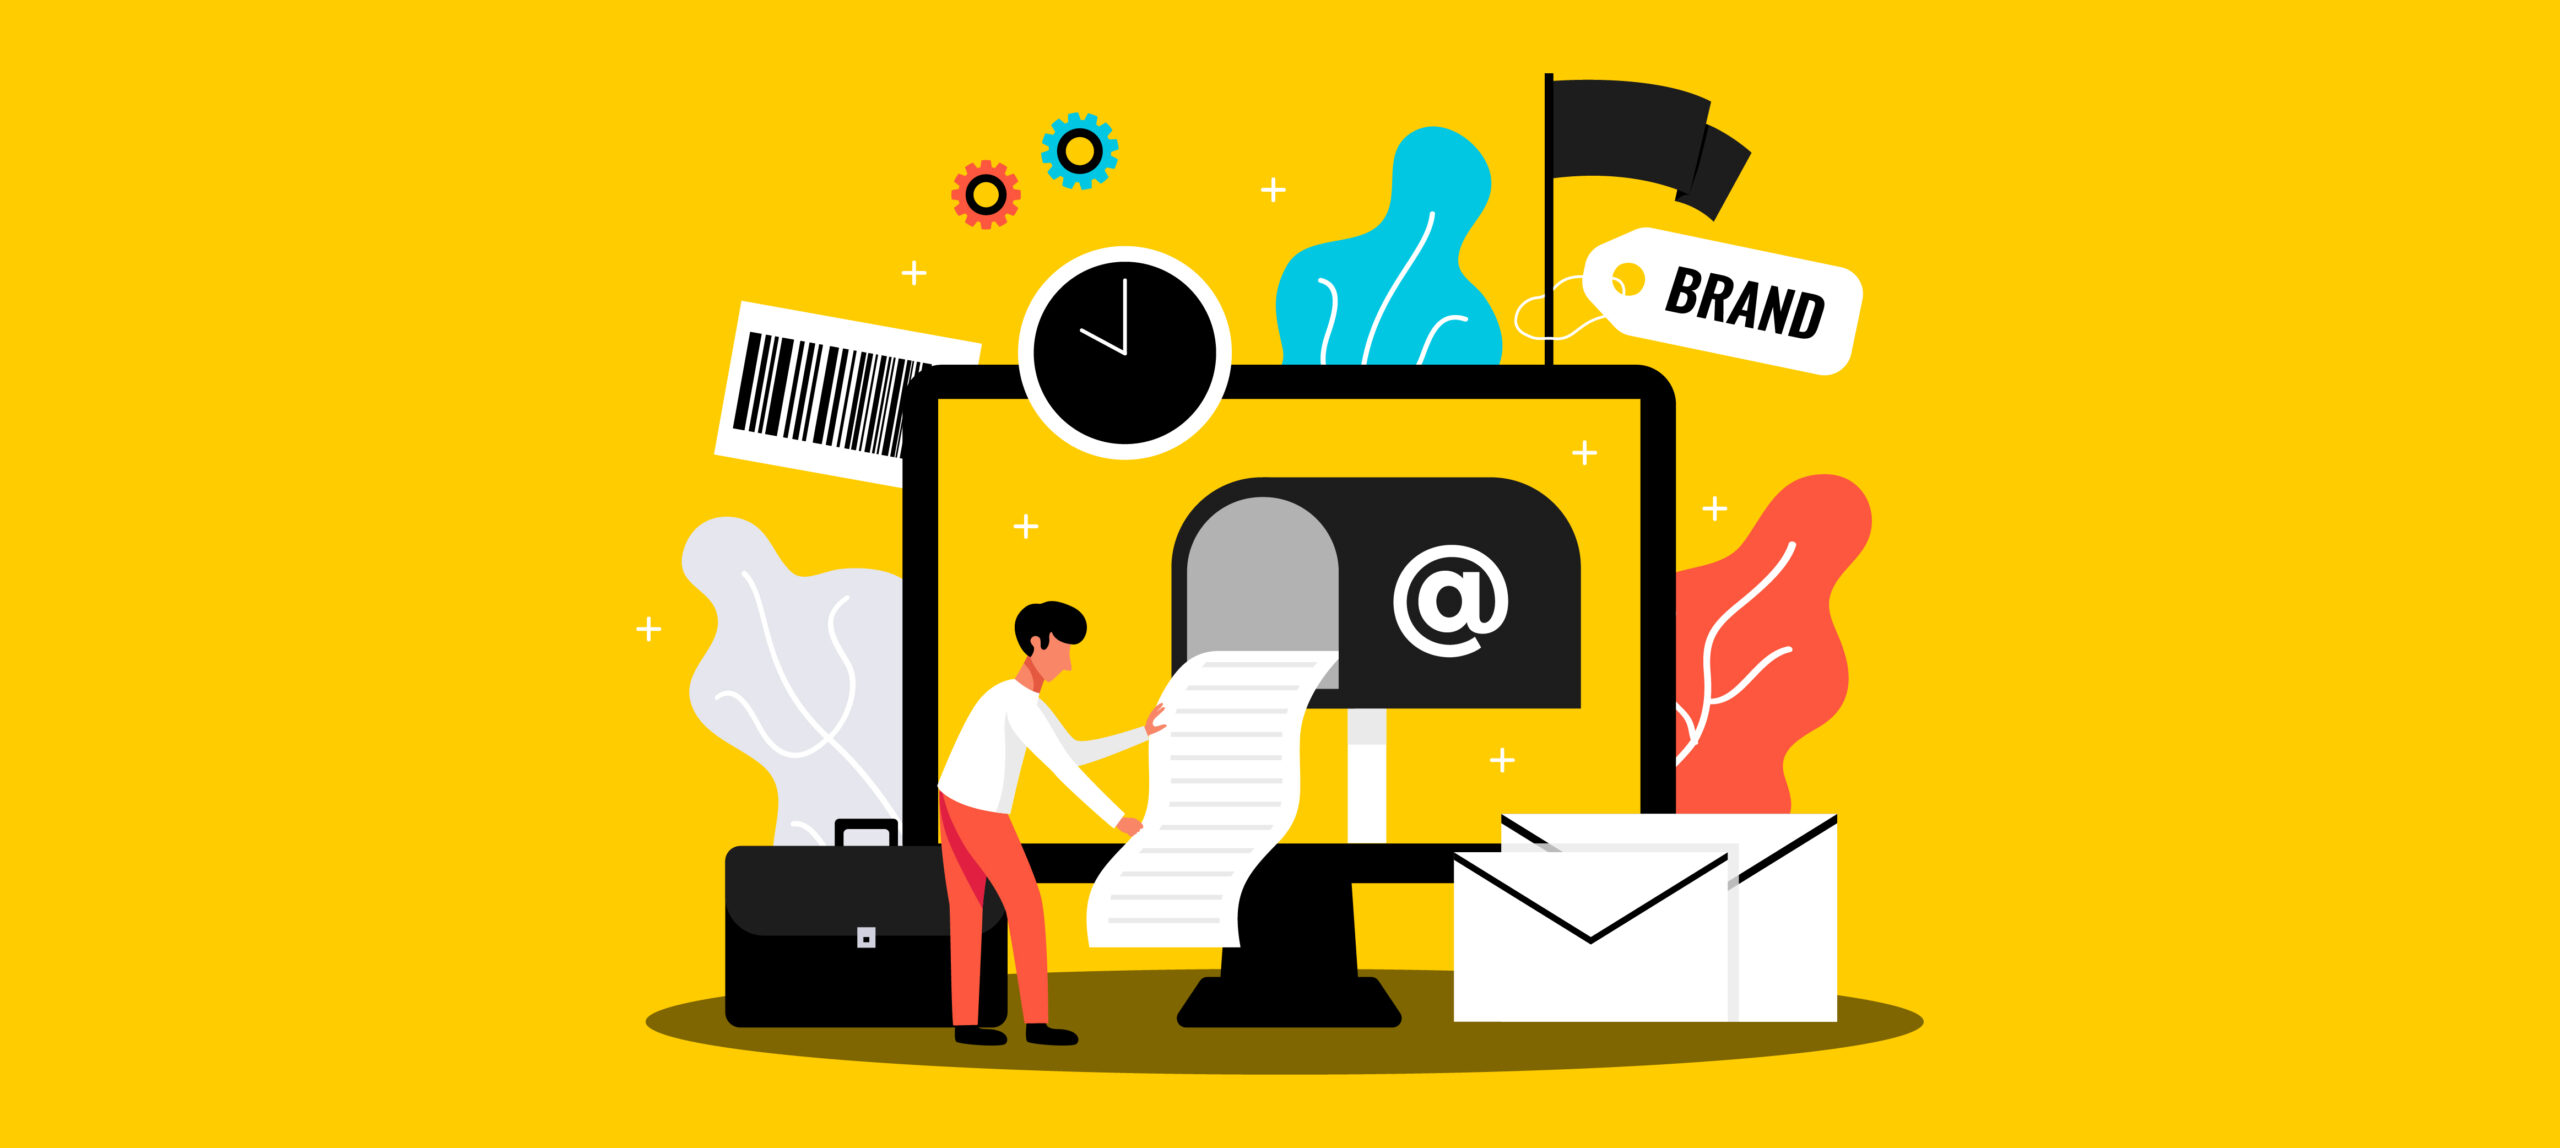 Email Marketing Jargon Explained blog banner